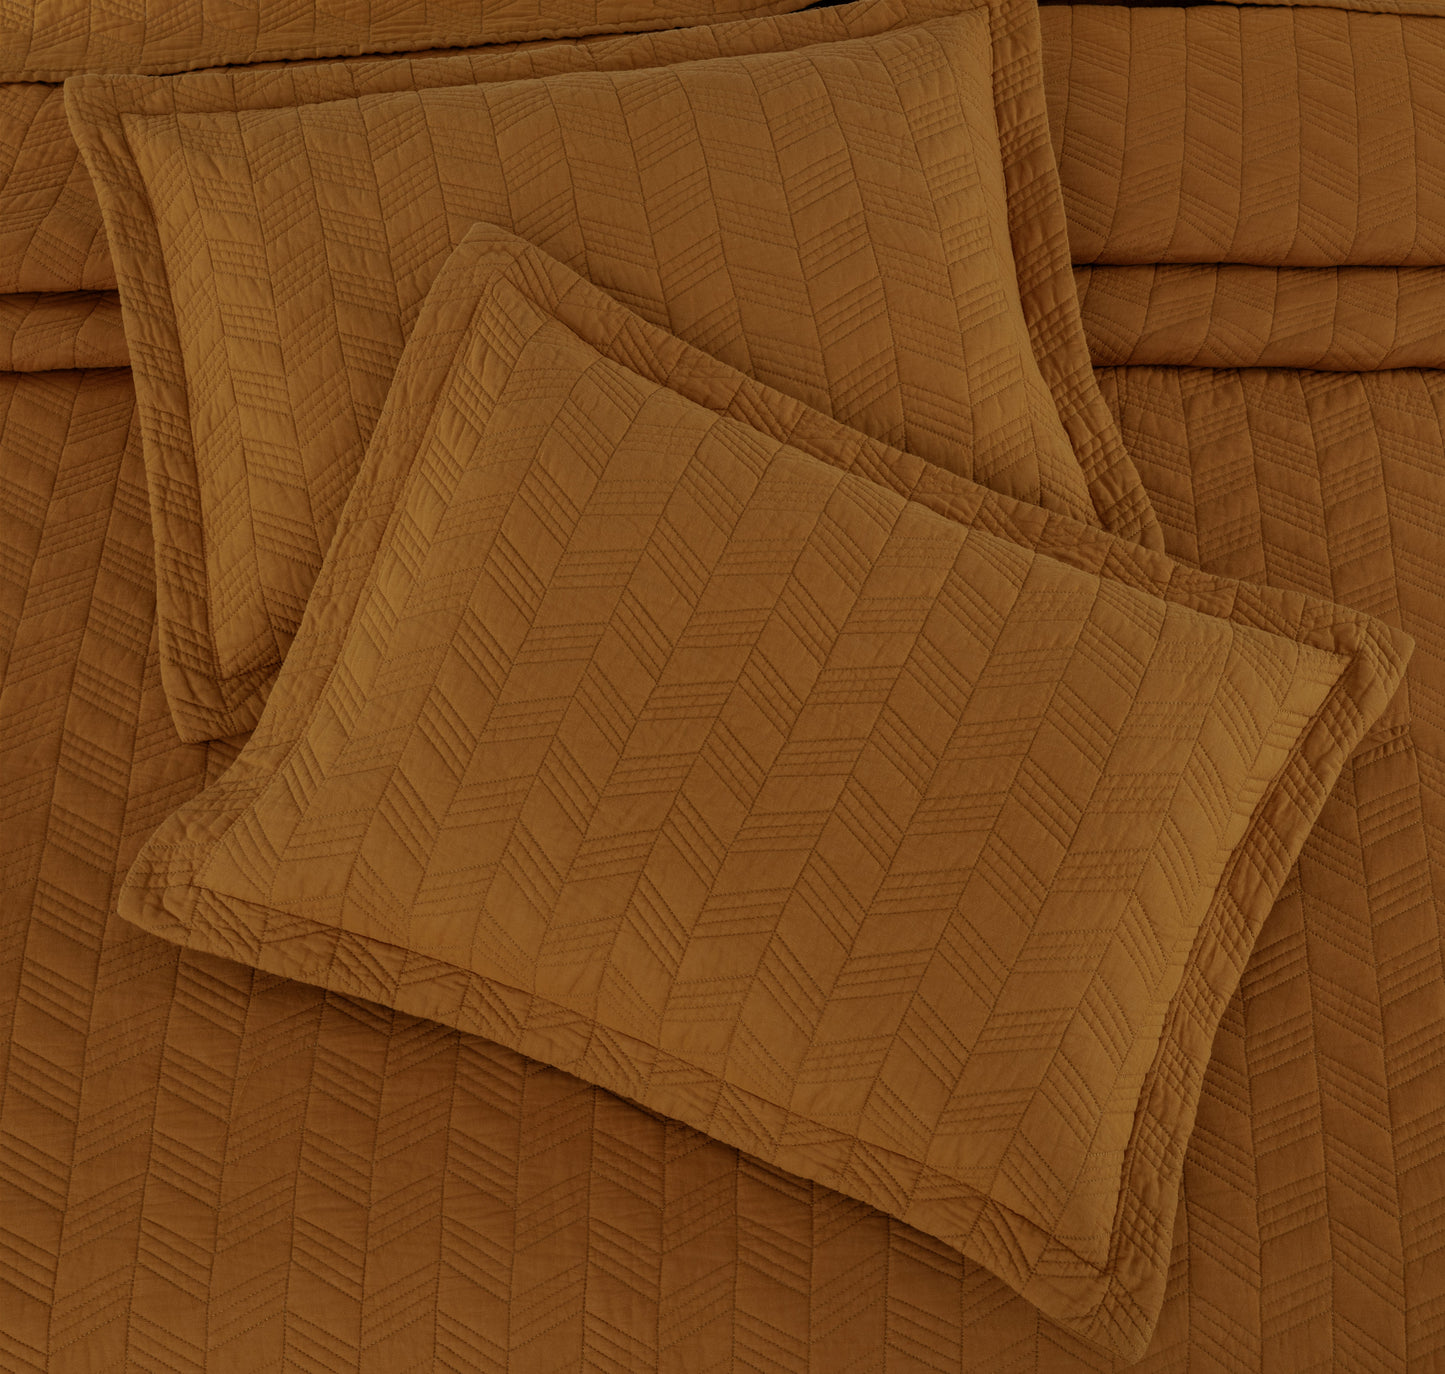 Roswell 3-piece Geometric Diagonal Stripe Stitched Cotton Quilt Set